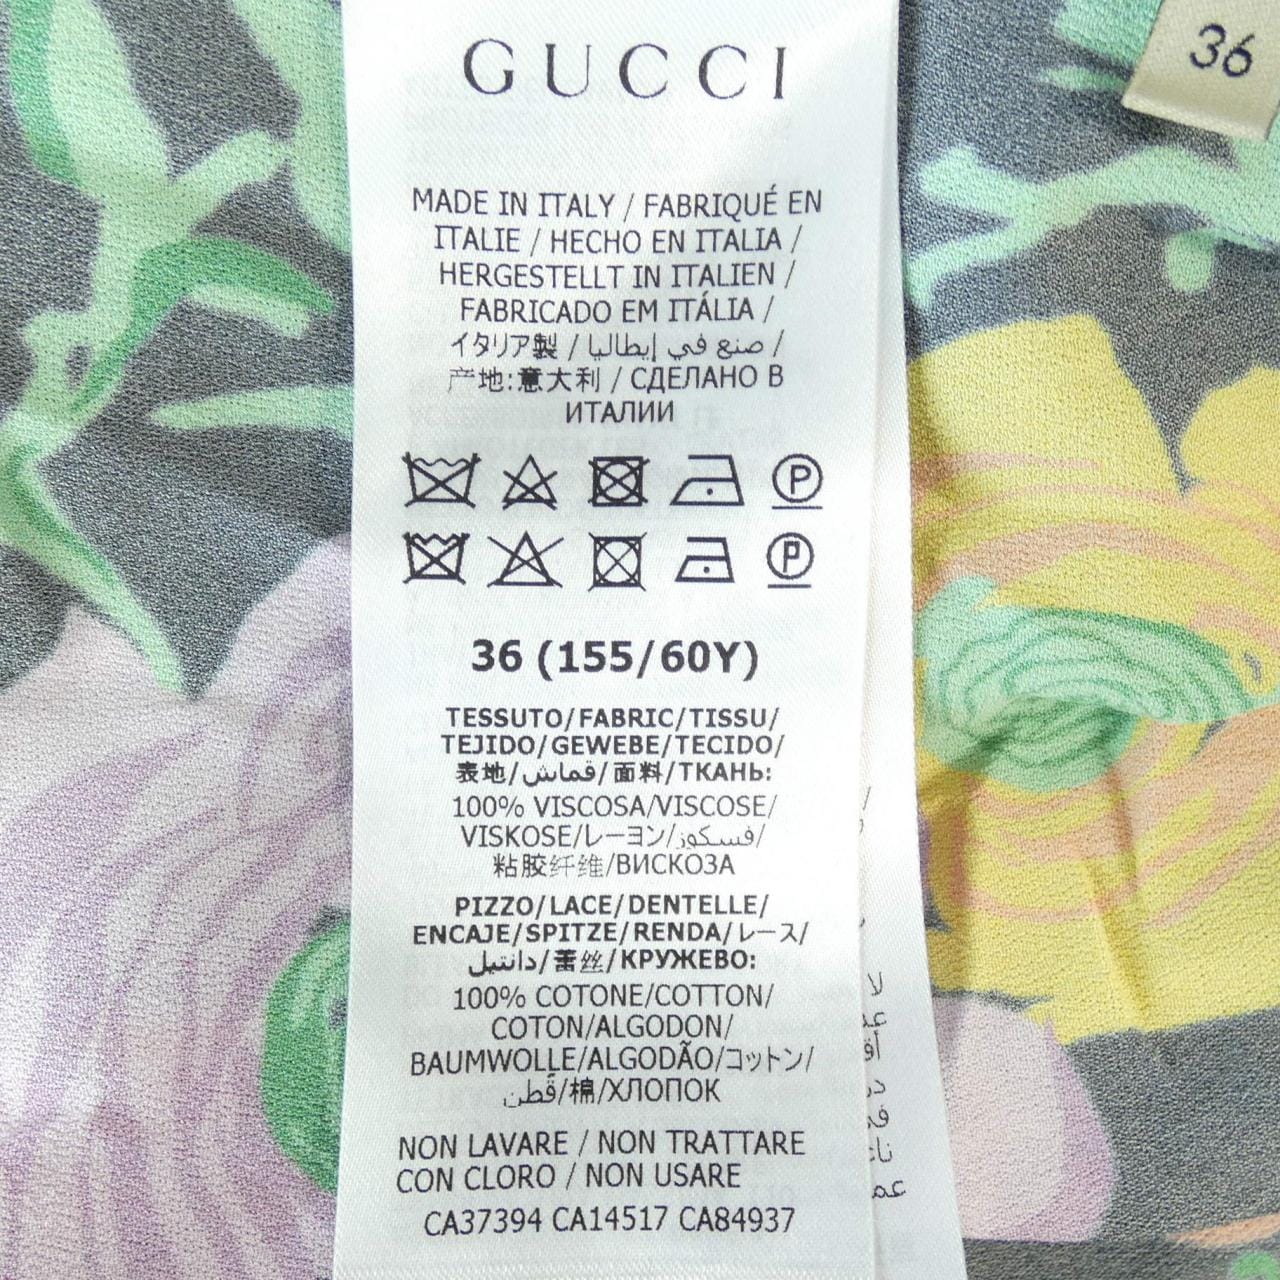 Gucci GUCCI skirt